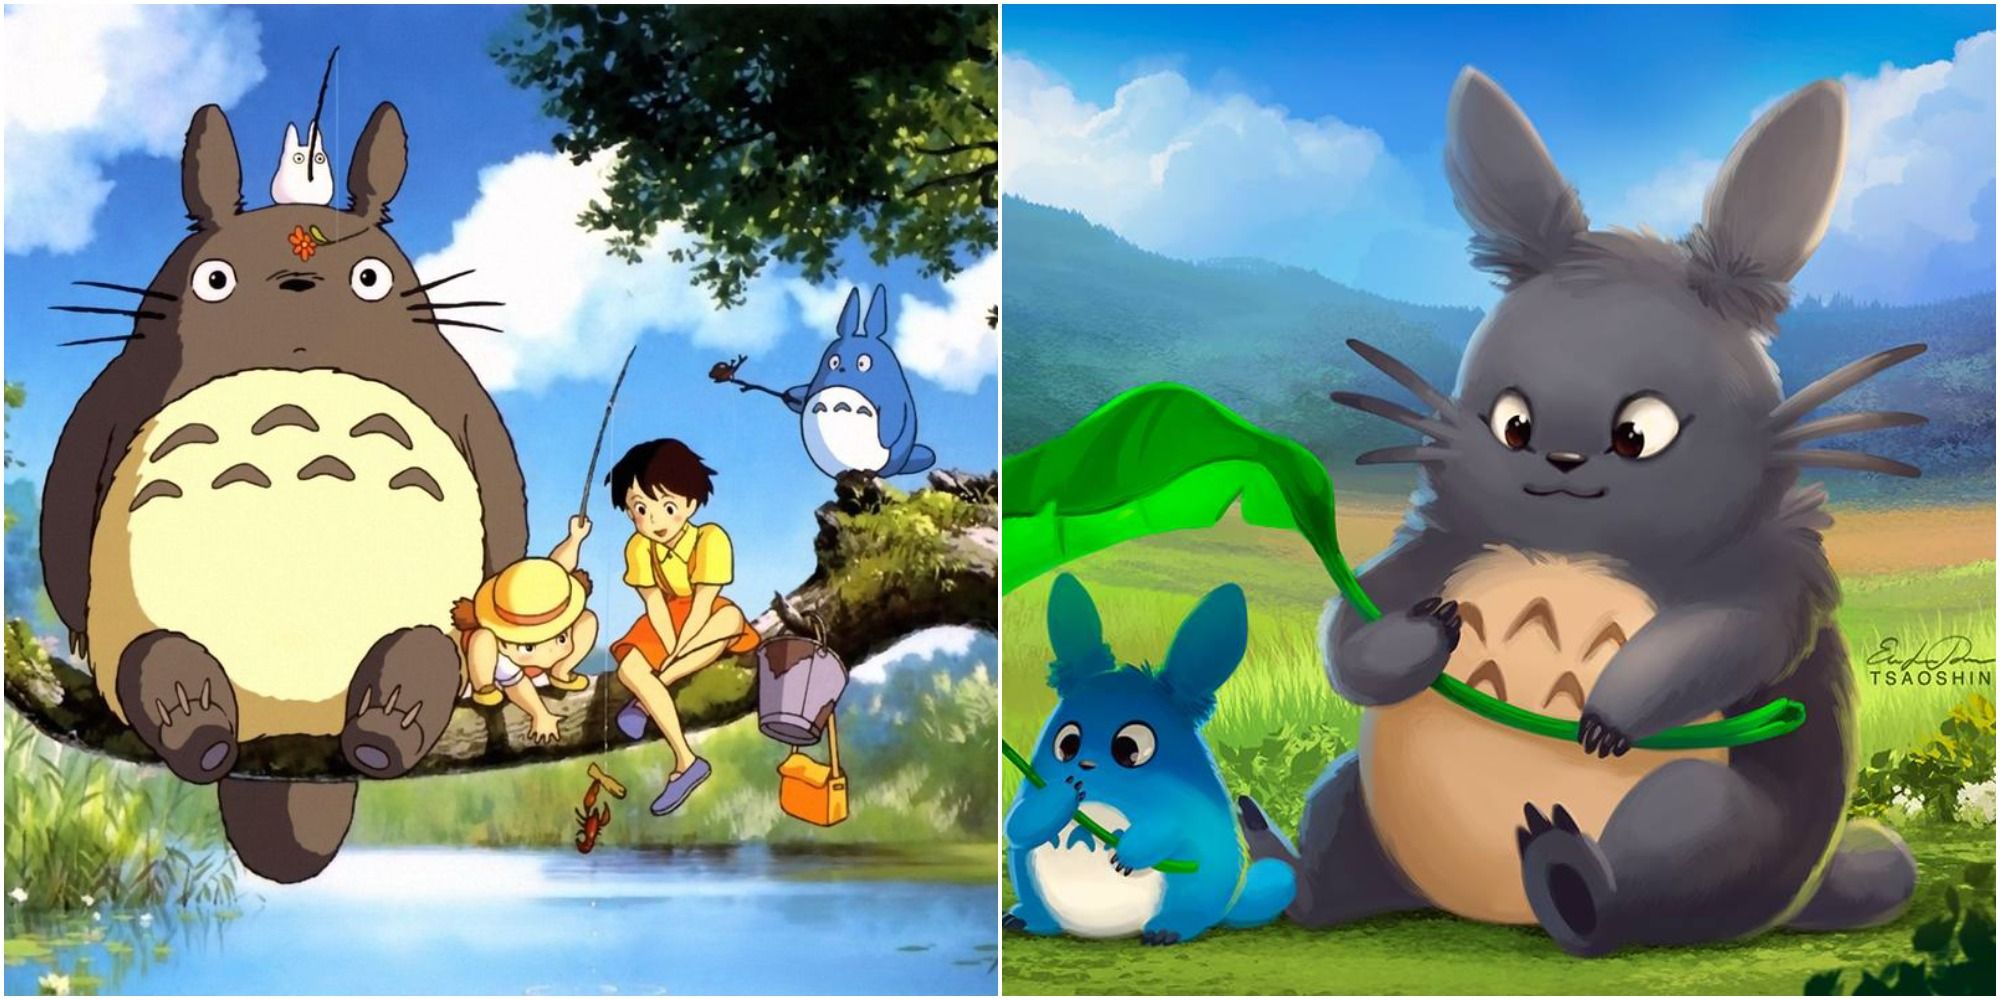 10 Totally Adorable Fan Art Pieces Of Studio Ghibli Creatures